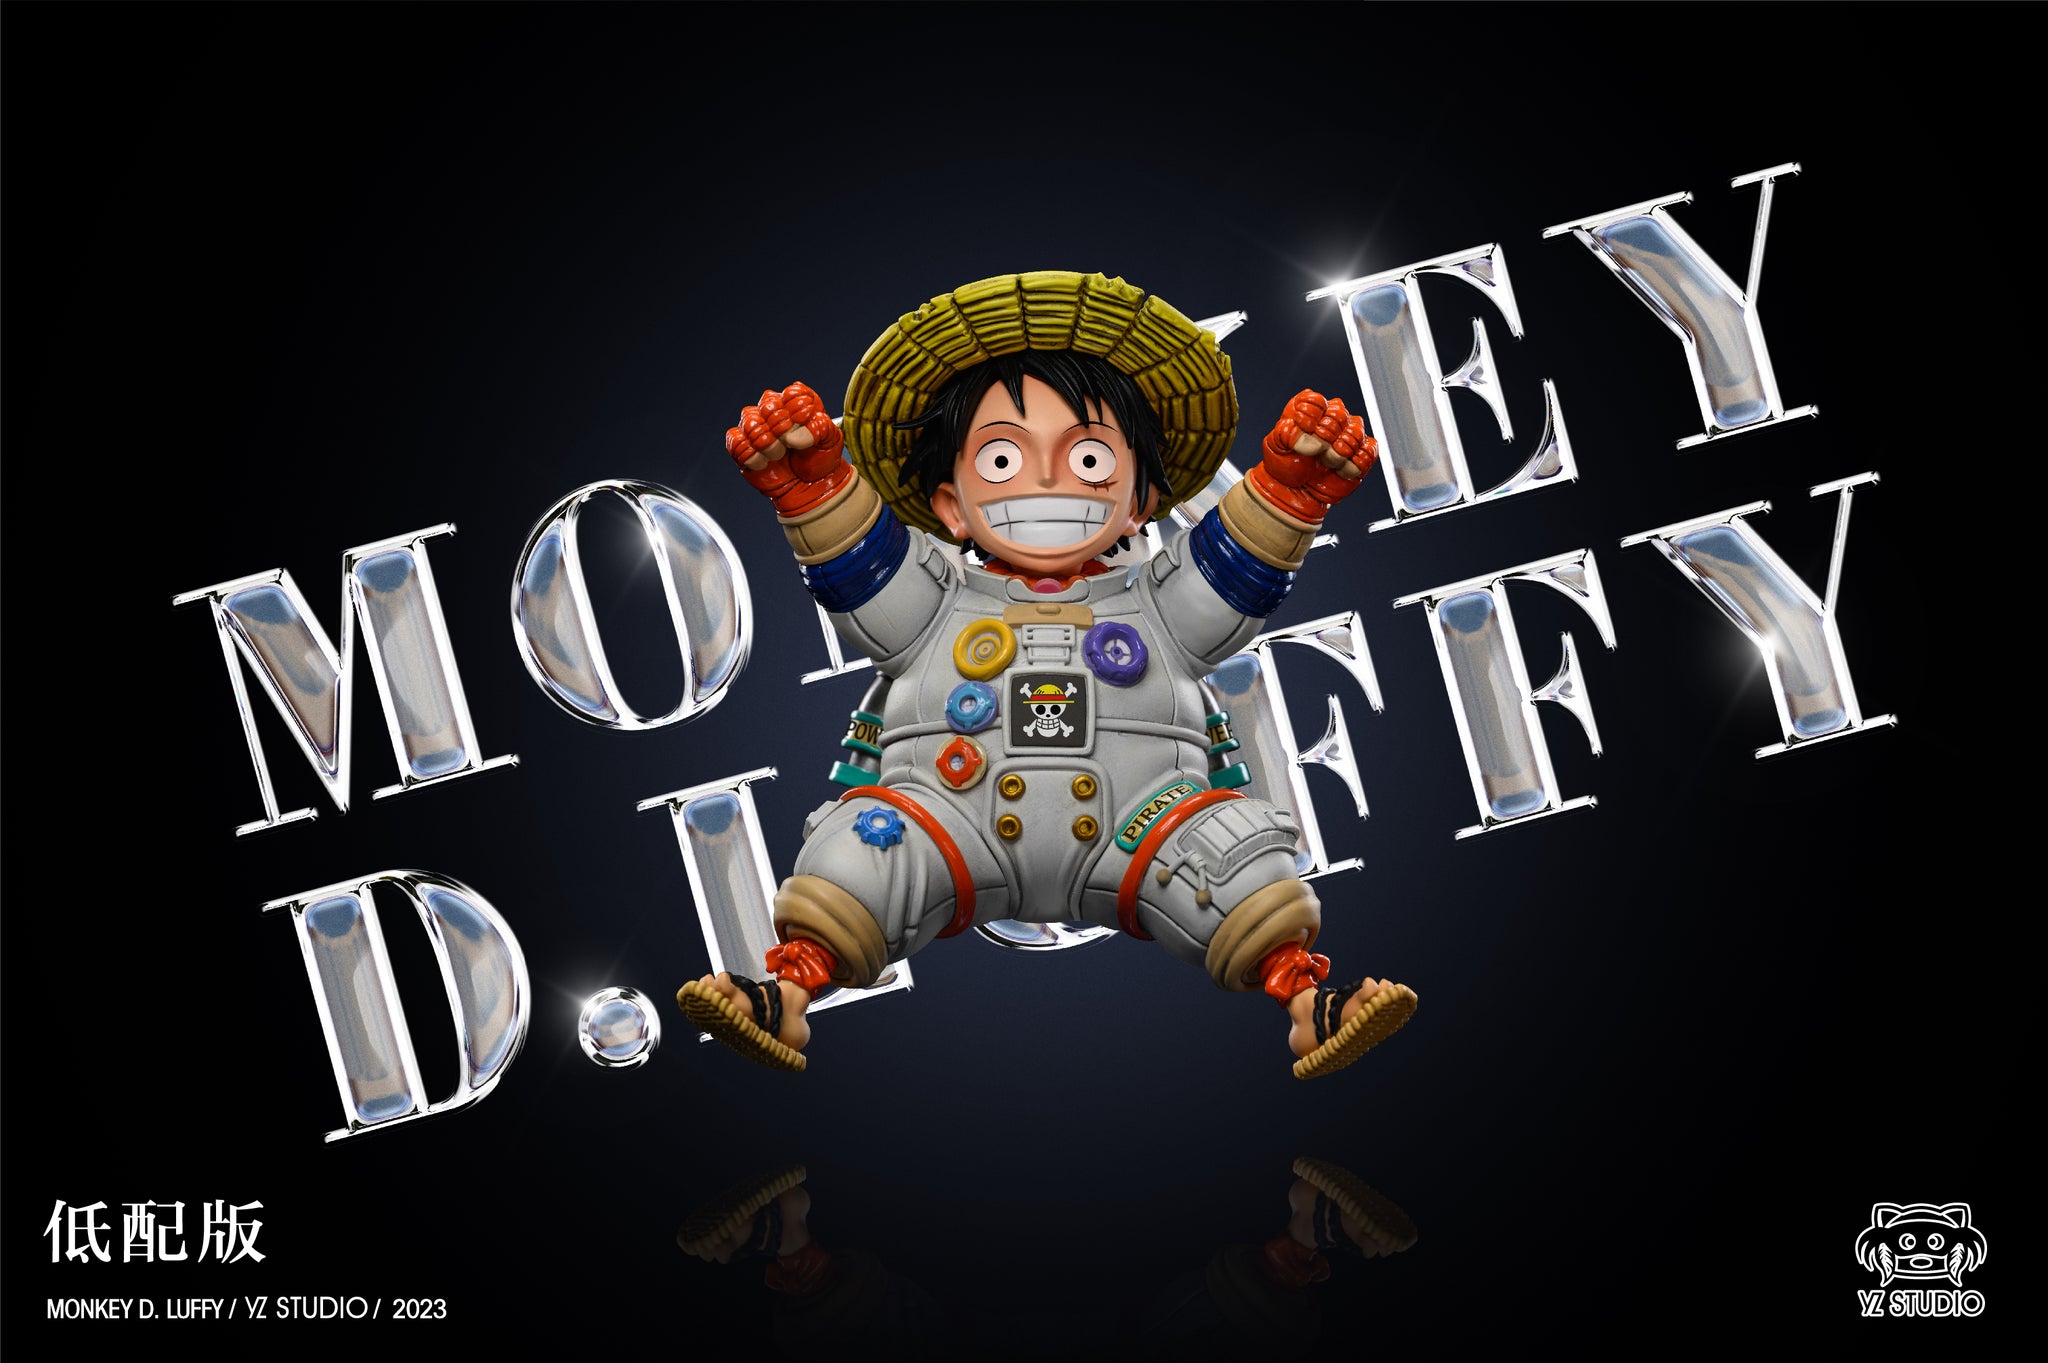 Yz Studio - Astronaut Monkey D. Luffy [2 Variants]